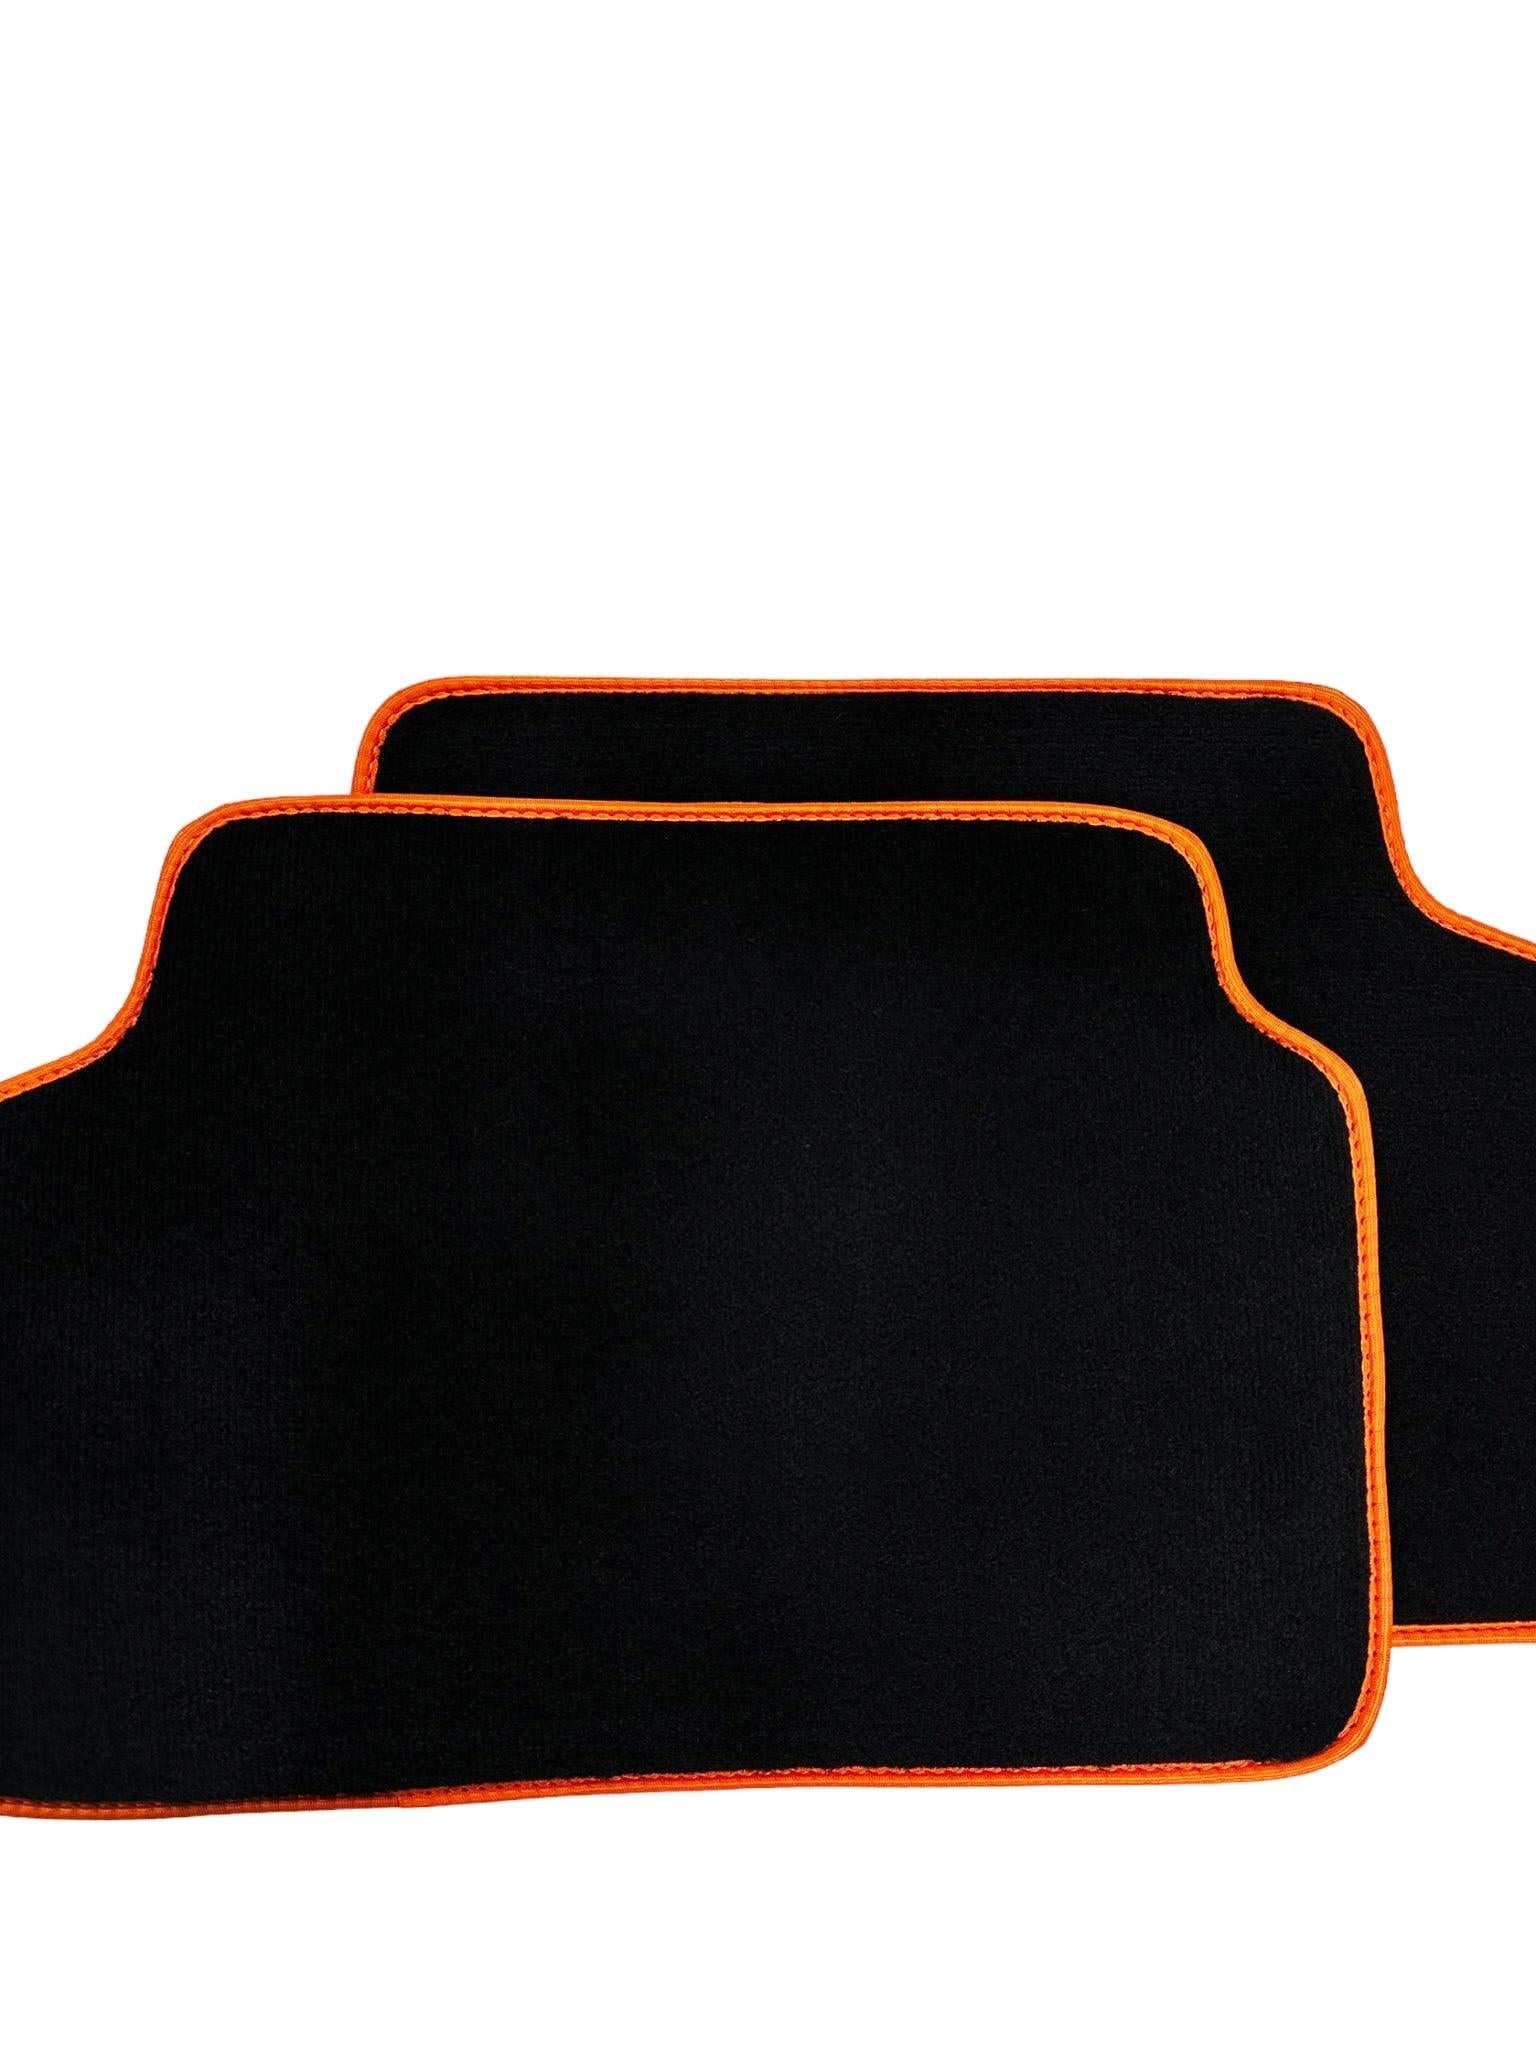 Black Floor Floor Mats For BMW X6 Series E71 | Orange Trim